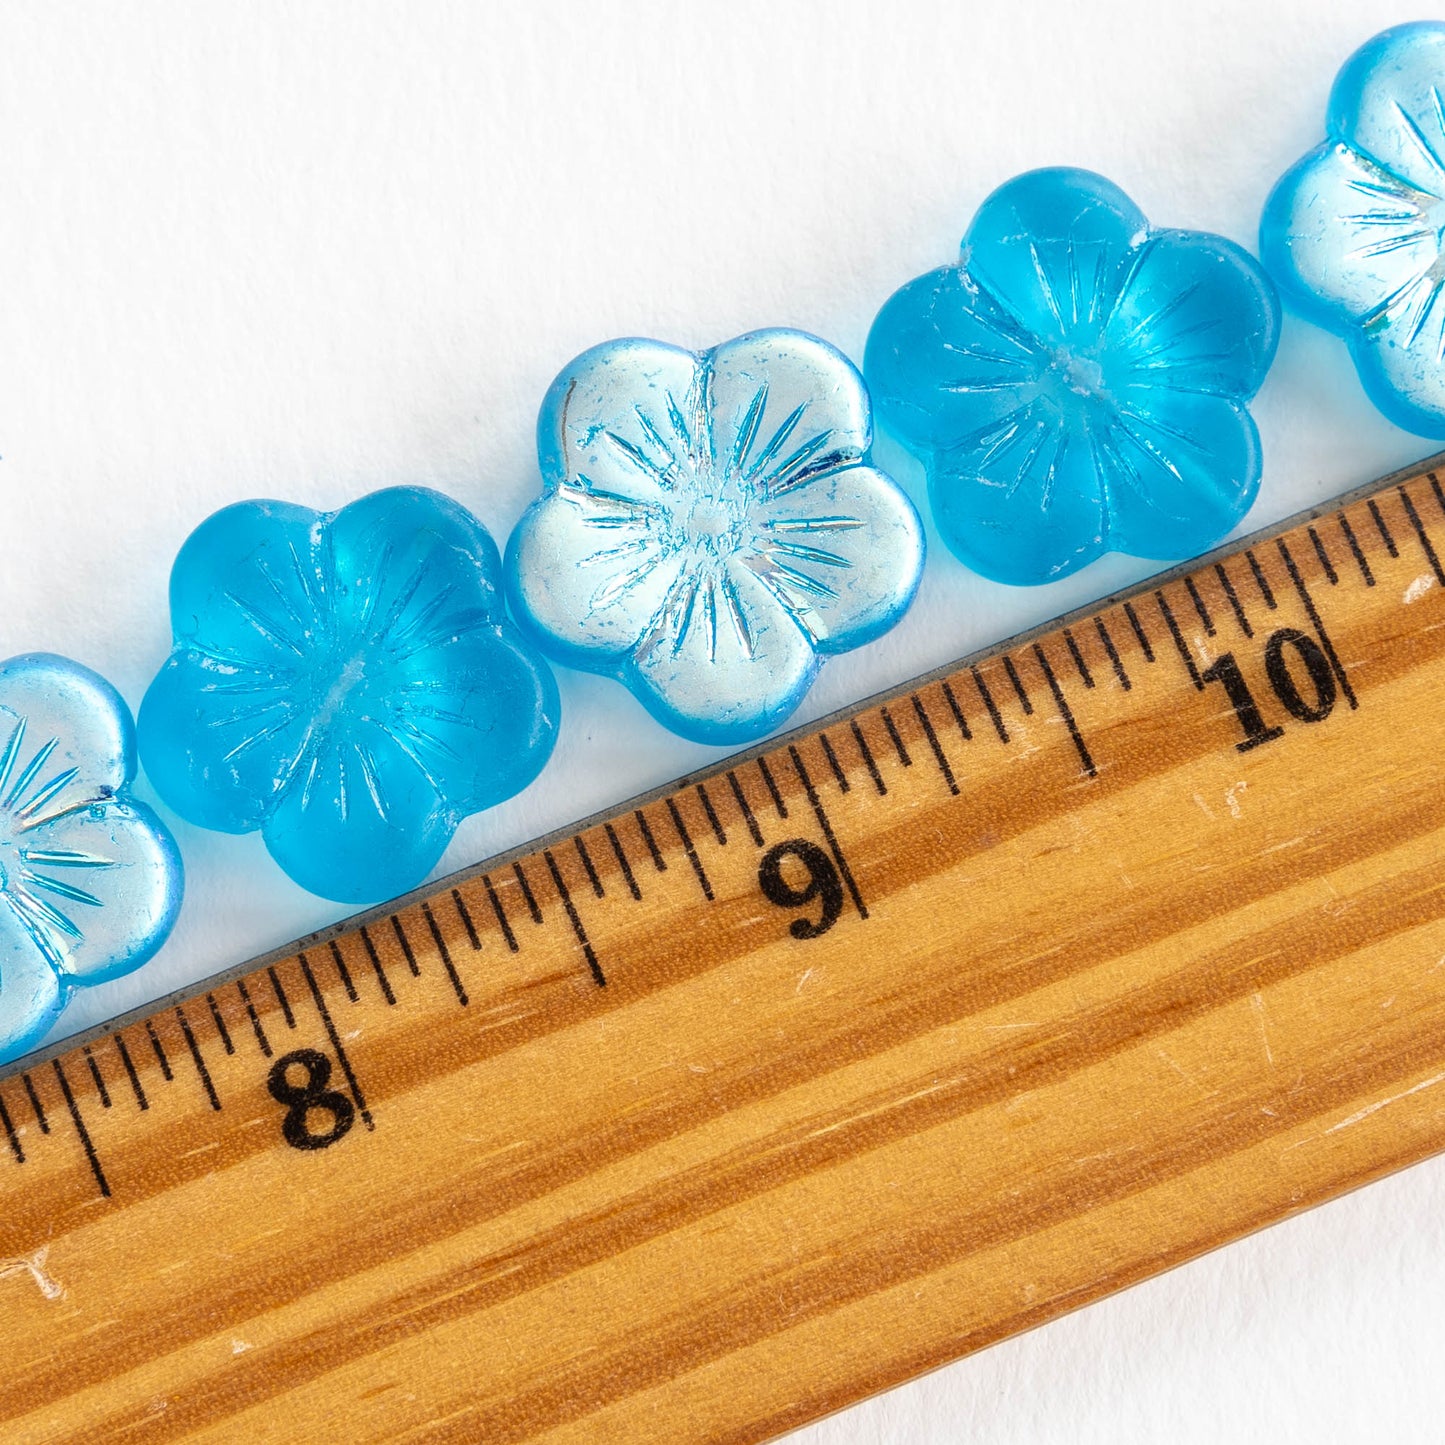 Copy of 20mm Hibiscus Flower Beads - Matte Aqua Blue AB - 10 Beads